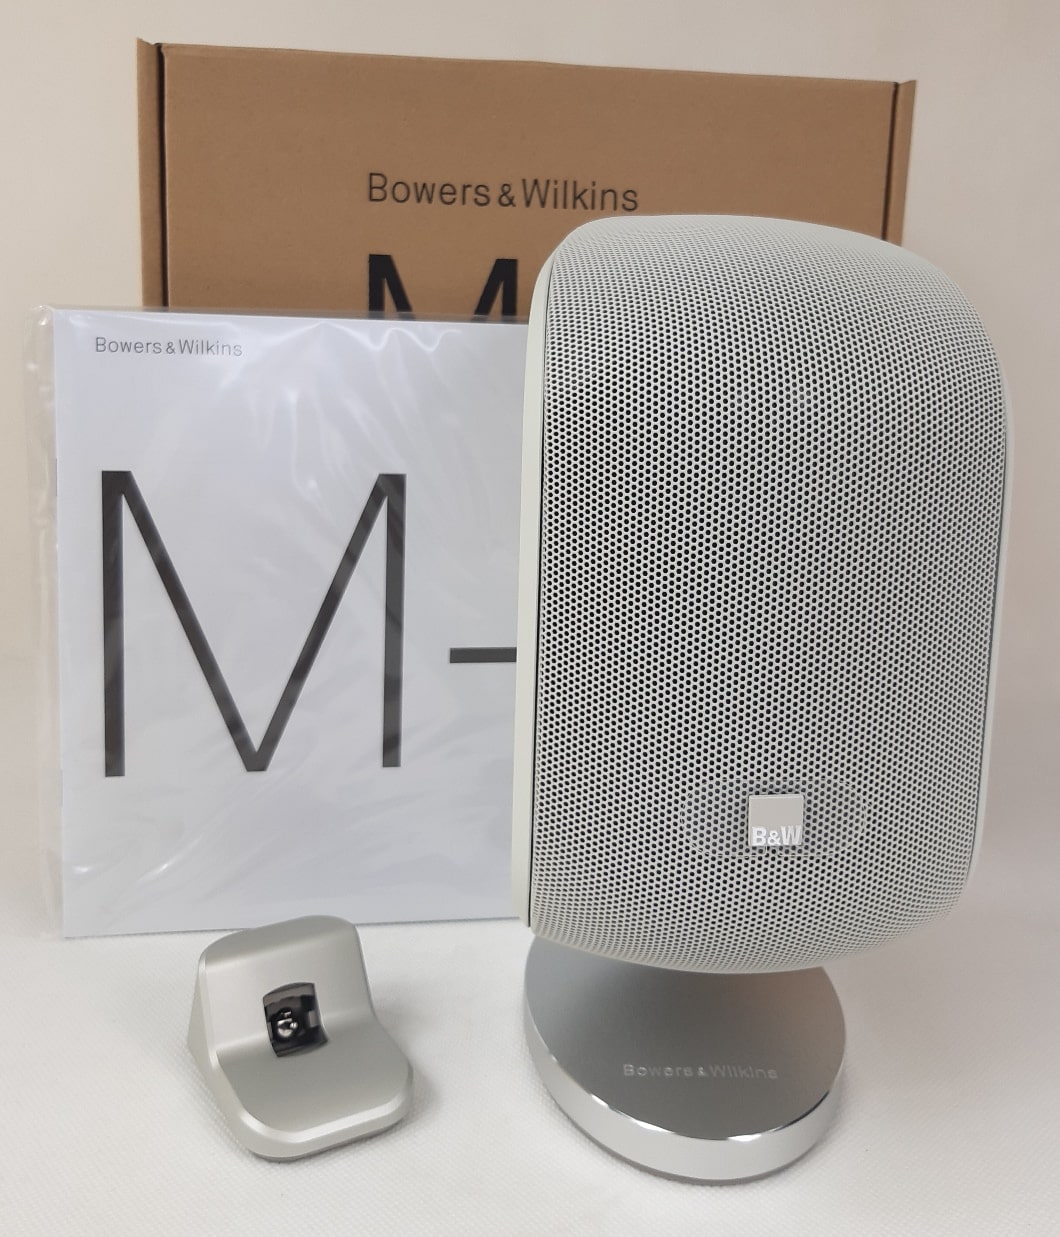 Bowers&Wilkins M-1 white box